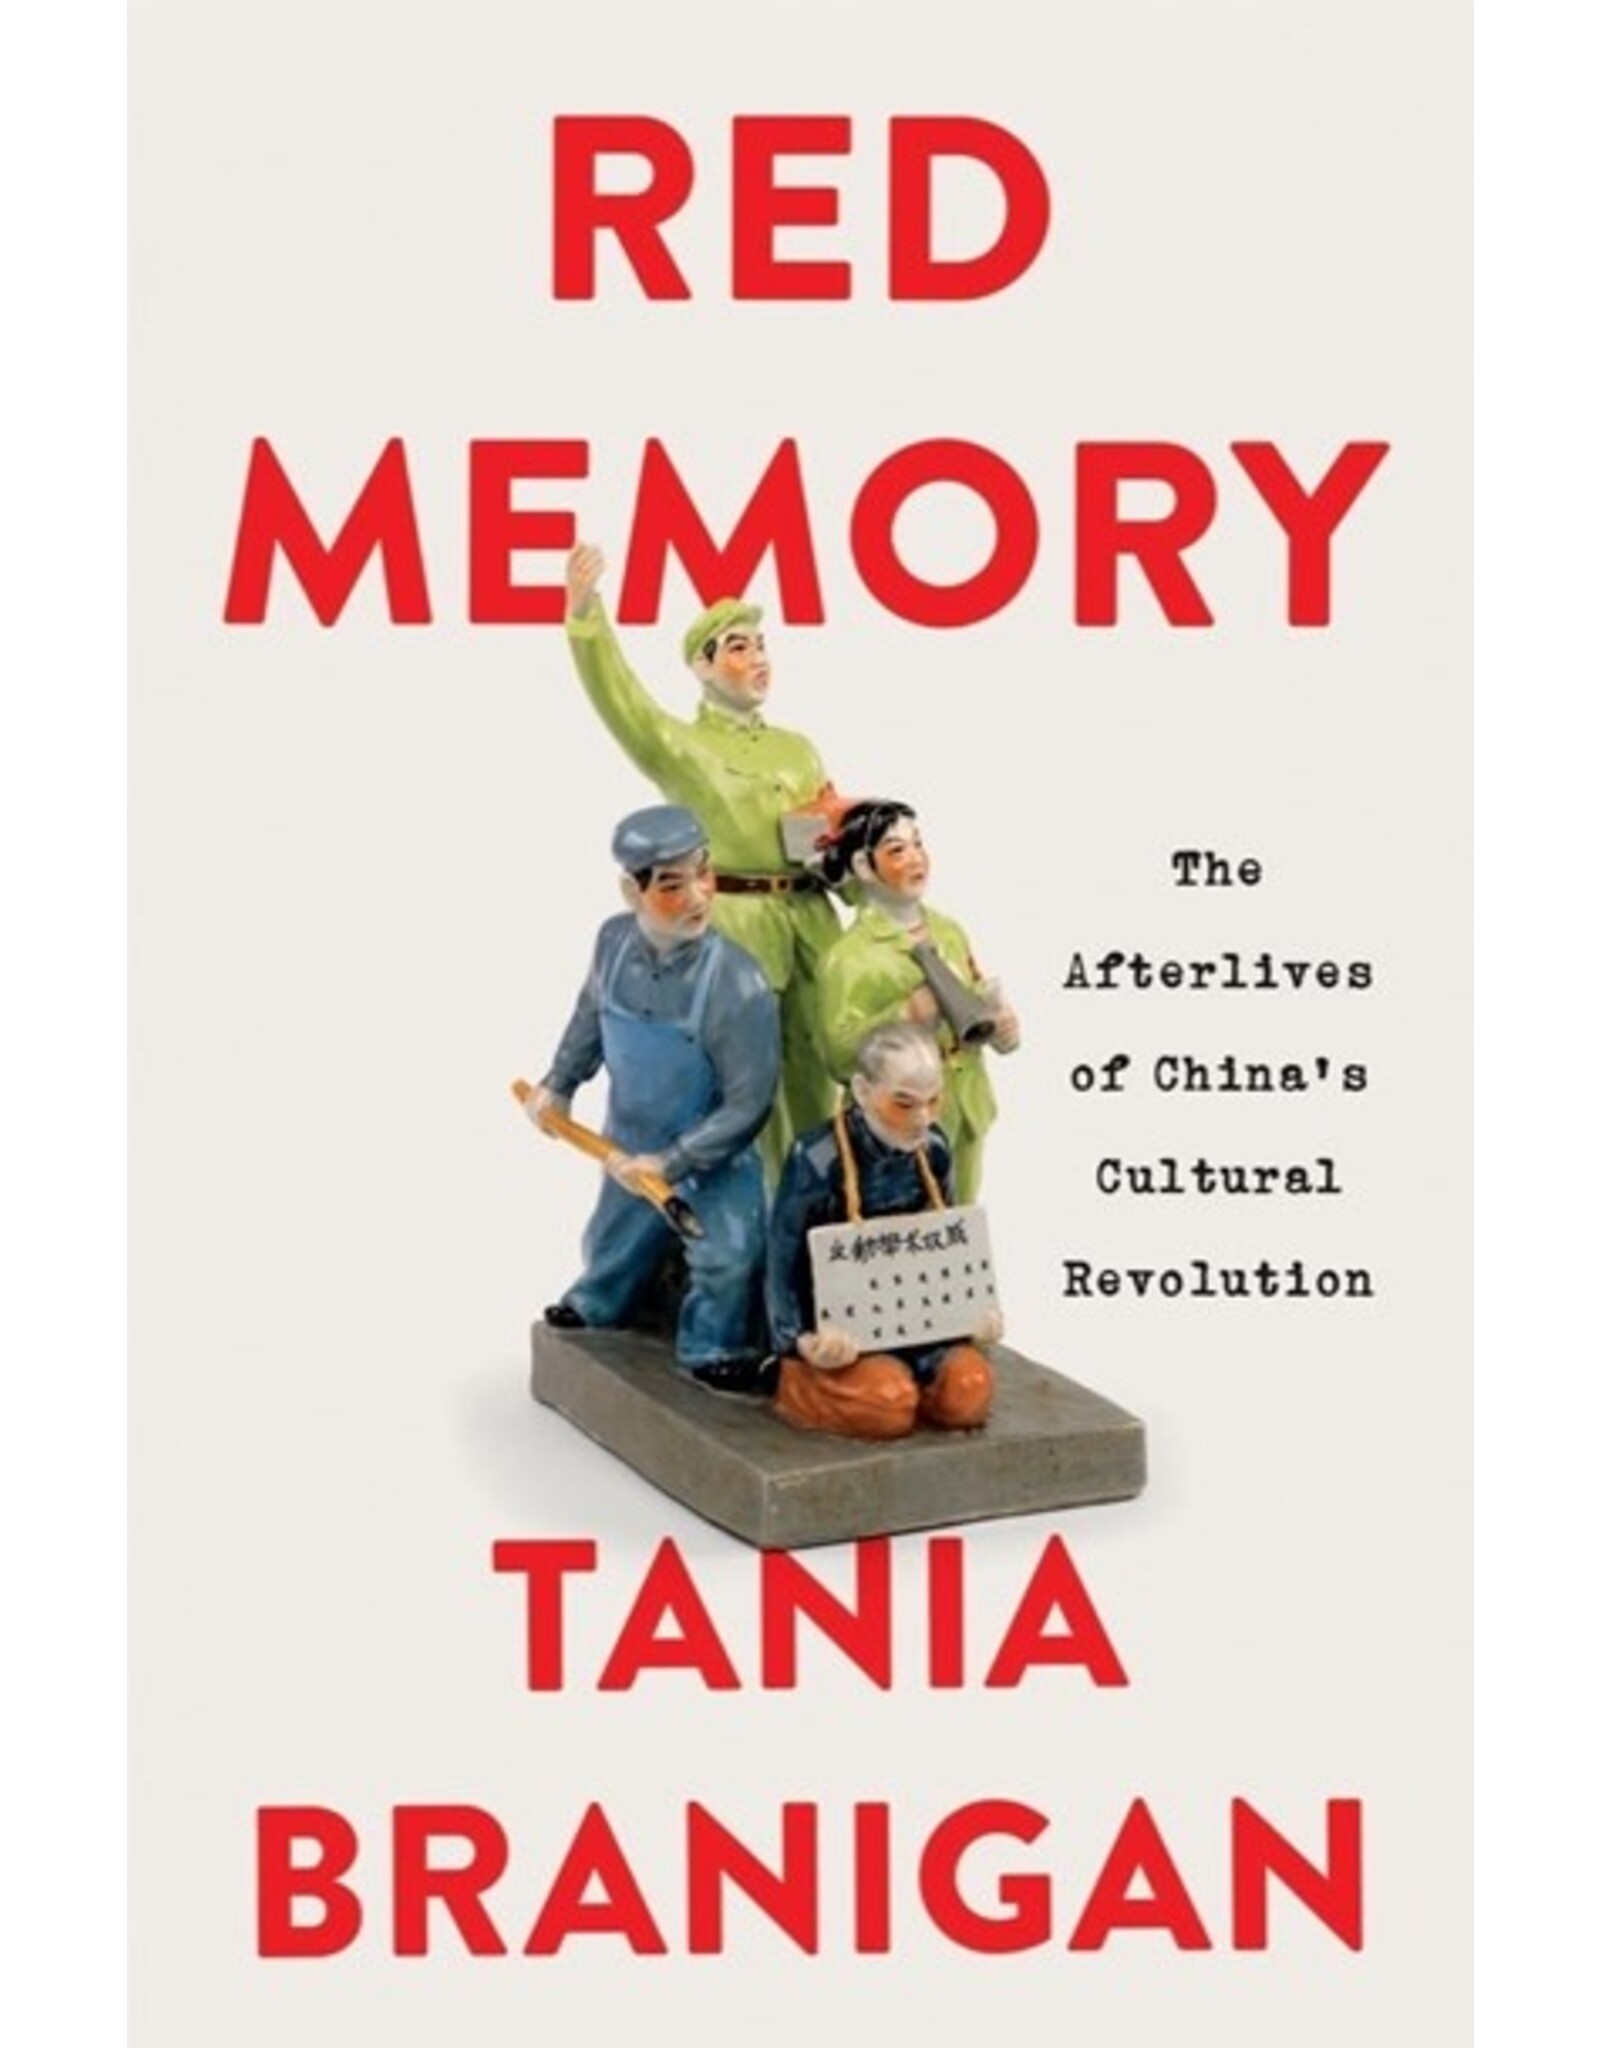 Books Red Memory by Tania Branigan